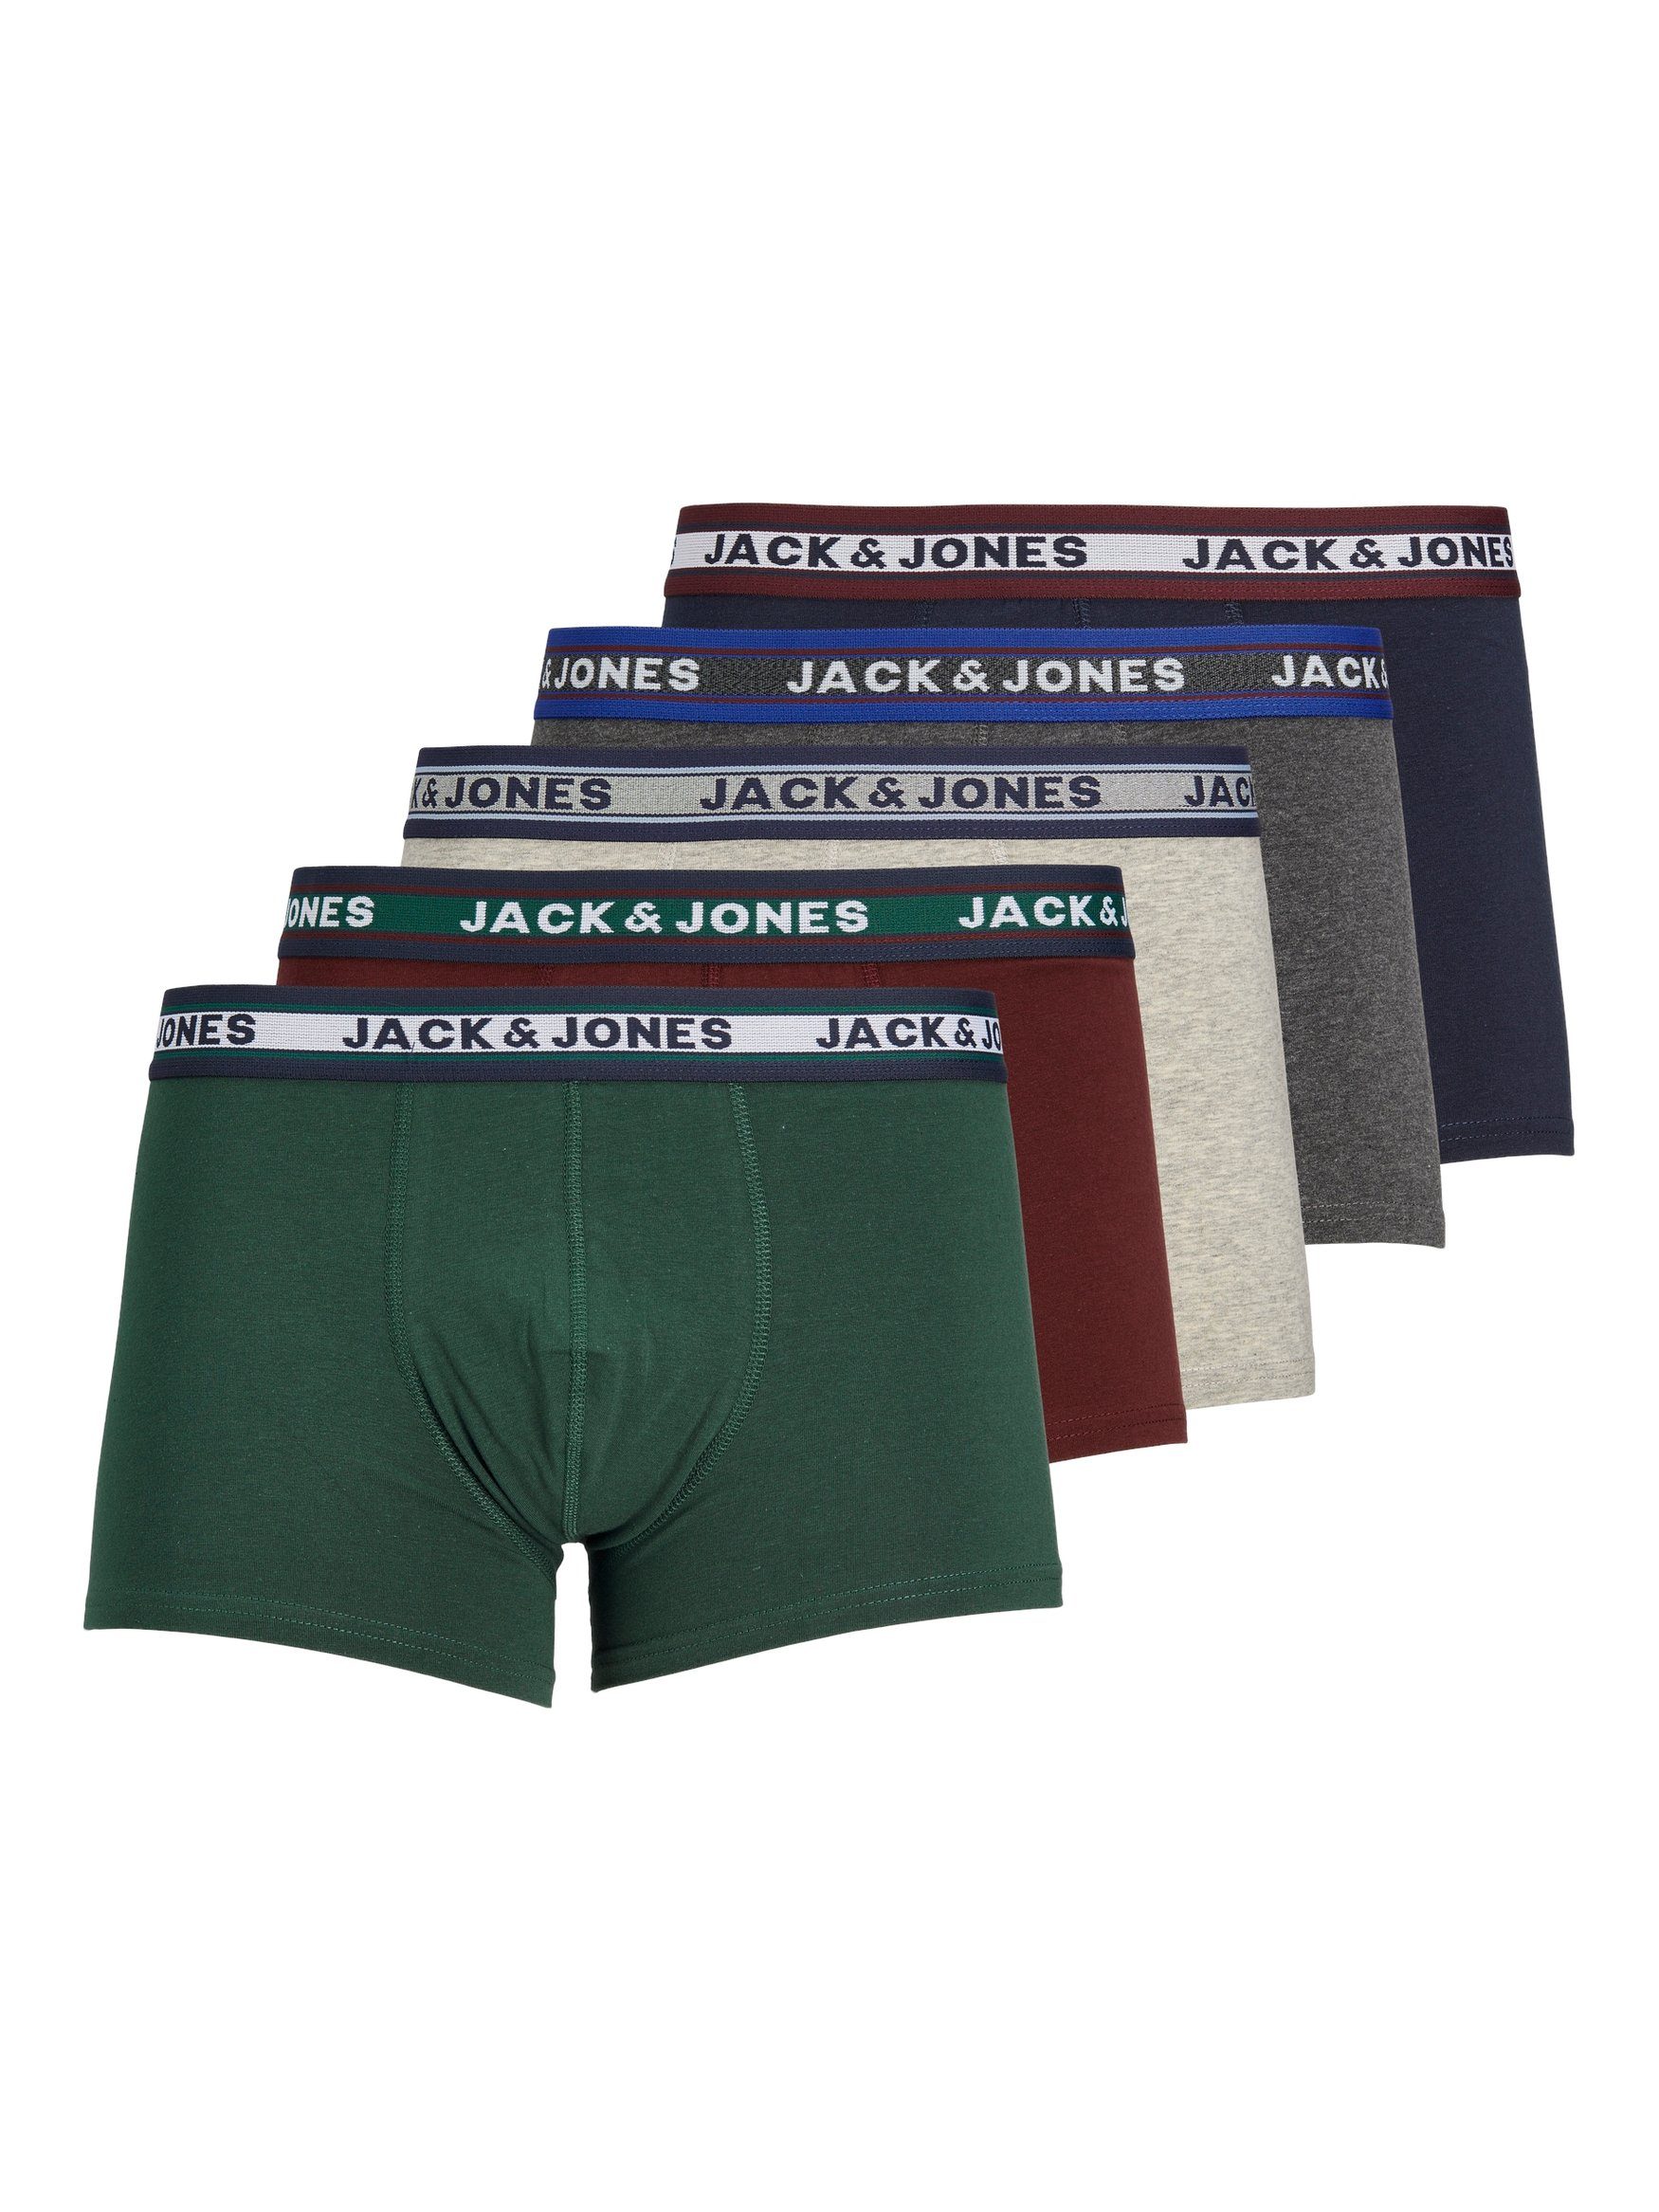 Jack & Jones moss/port 5er-Pack Trunks blazer/LGM Boxershorts Unterhosen royale/navy Boxershorts 6820 DGM/sea Set JACOLIVER (5-St) in Basic Mehrfarbig